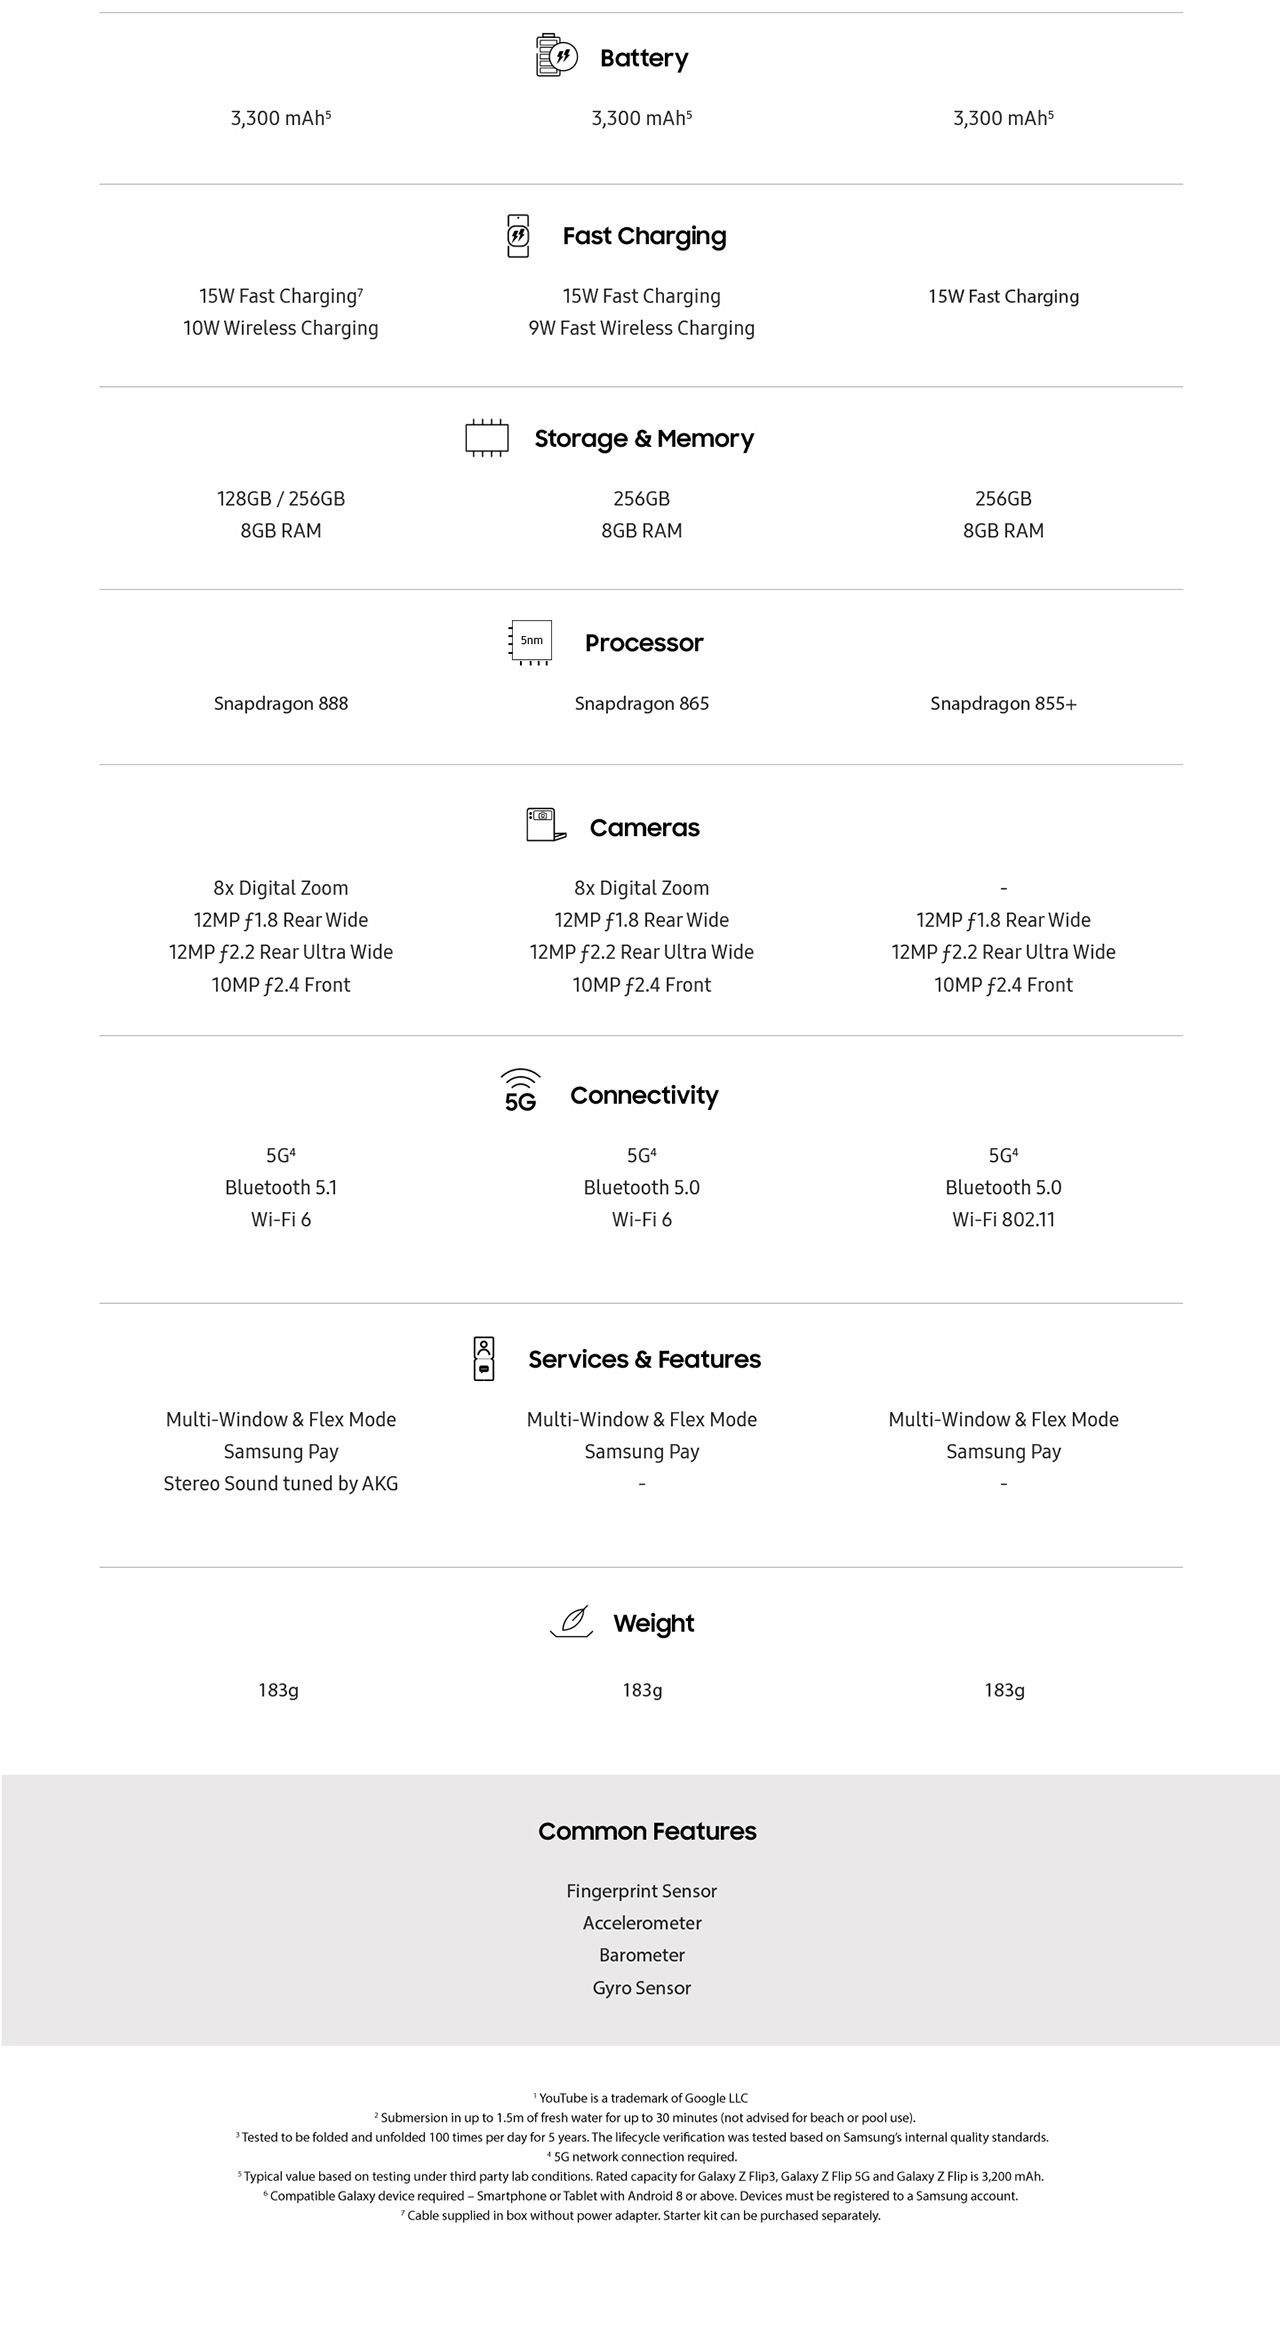 Galaxy Z Flip3 Product Information